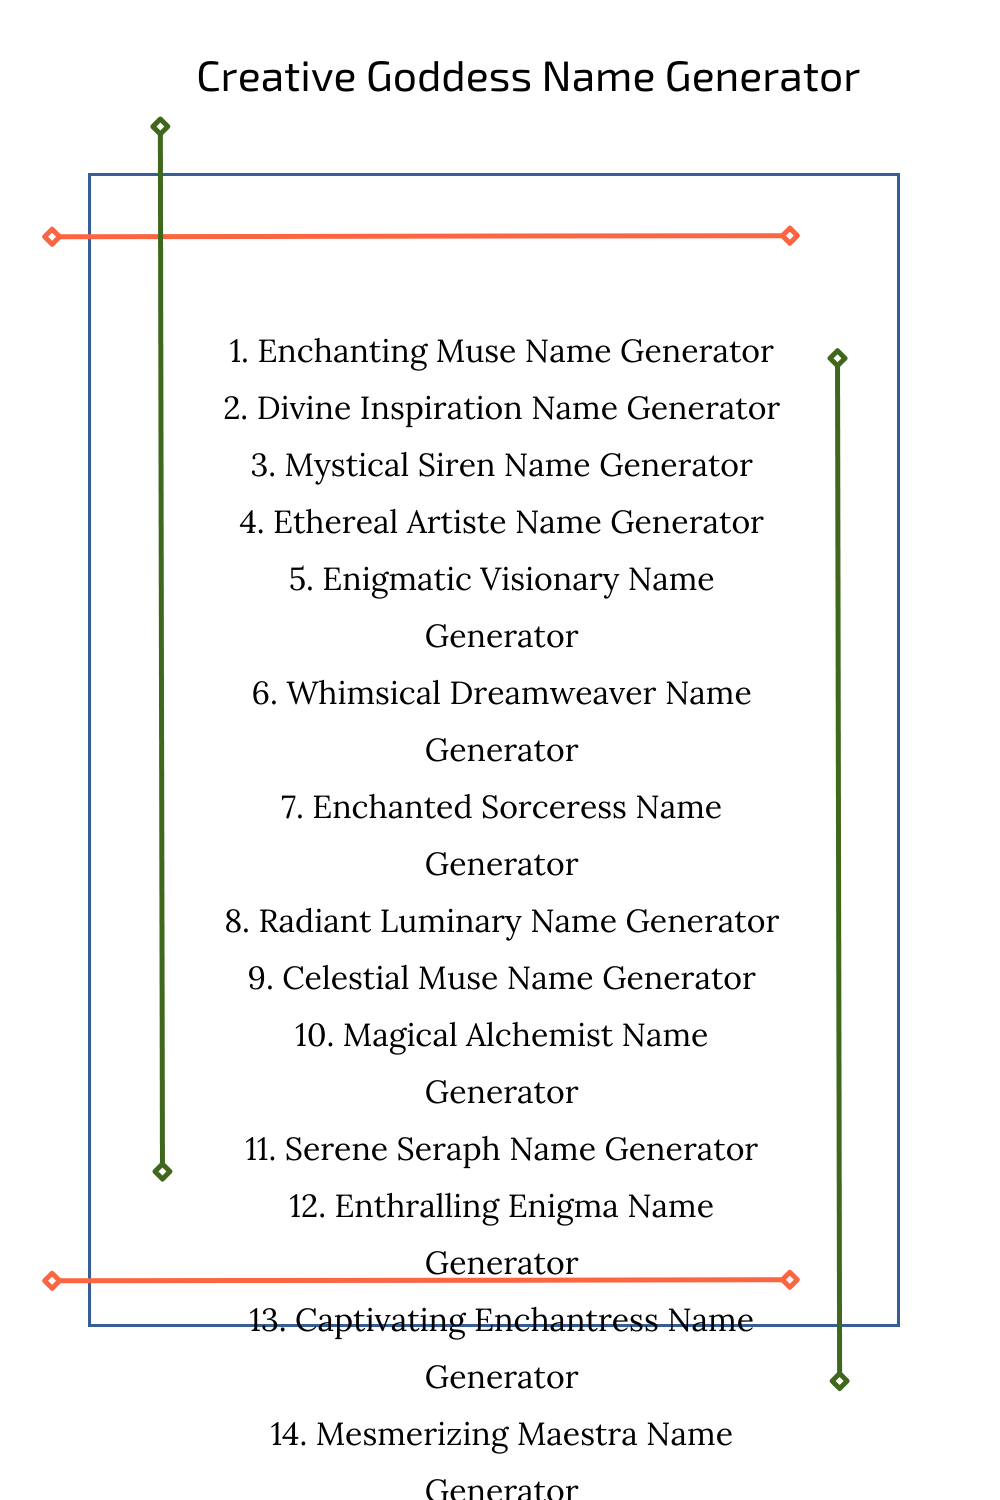 Creative Goddess Name Generator